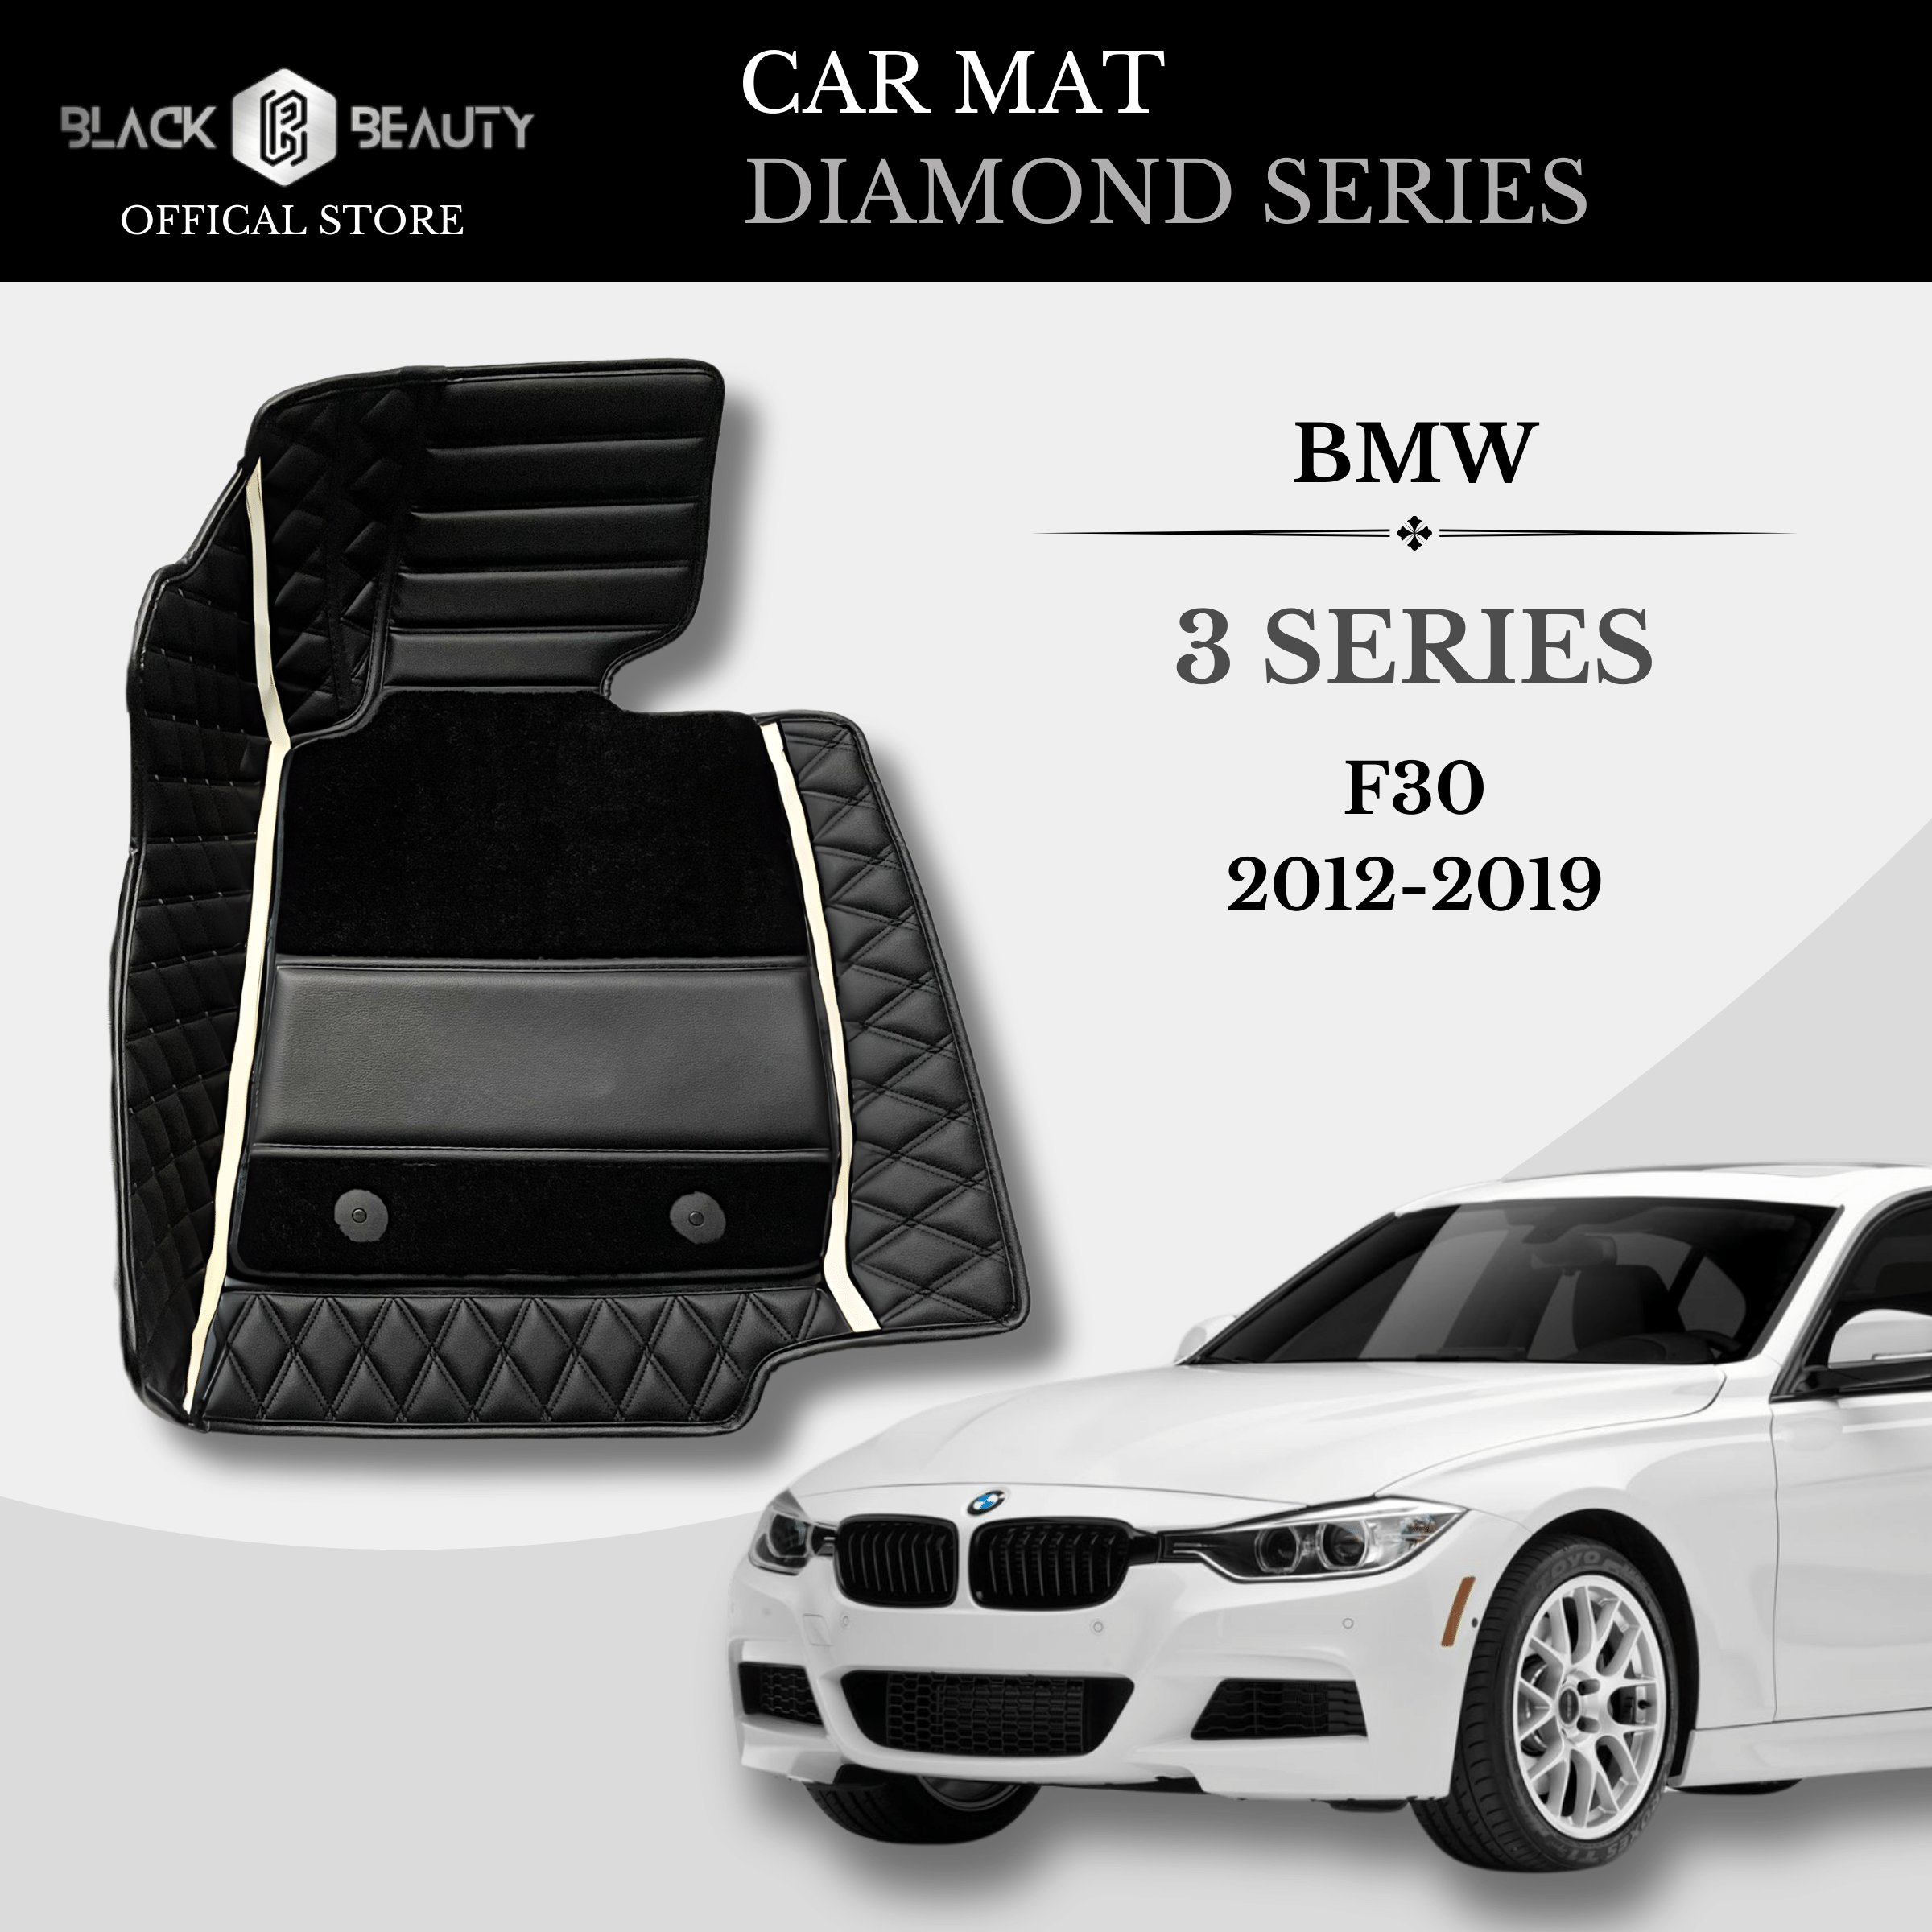 BMW 3 Series F30 (2012-2019) - Diamond Series Car Mat